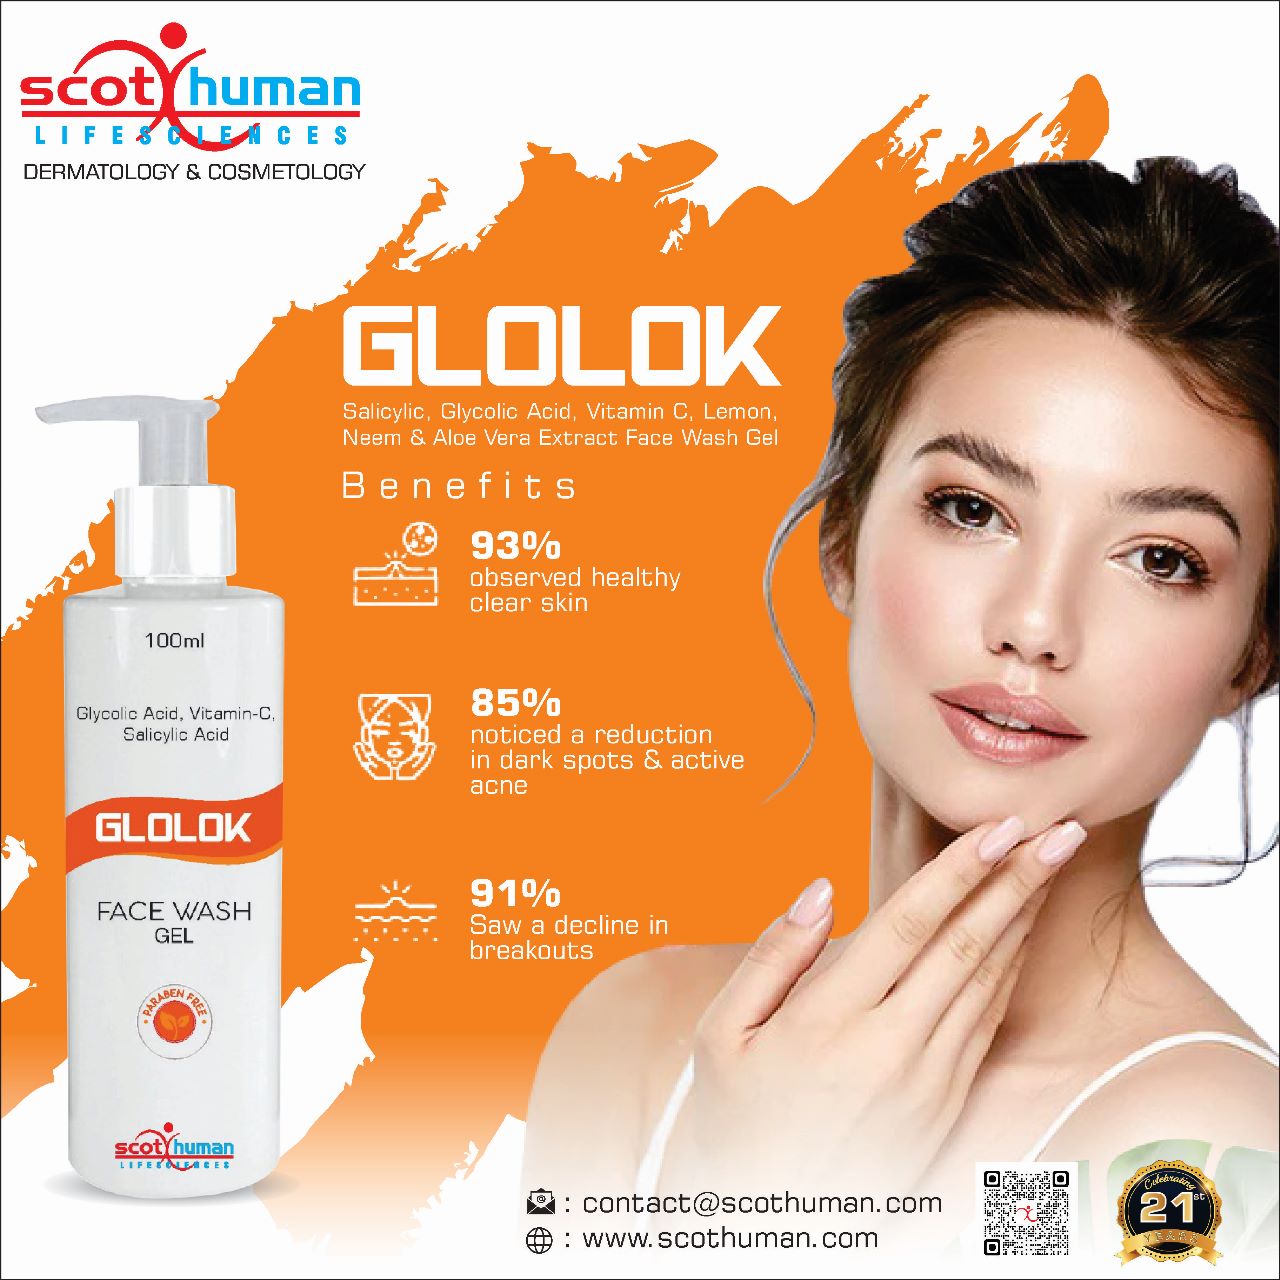 Product Name: Glosok, Compositions of Glosok are Glycolic Acid Vitamic-C Salicylic Acid - Pharma Drugs and Chemicals